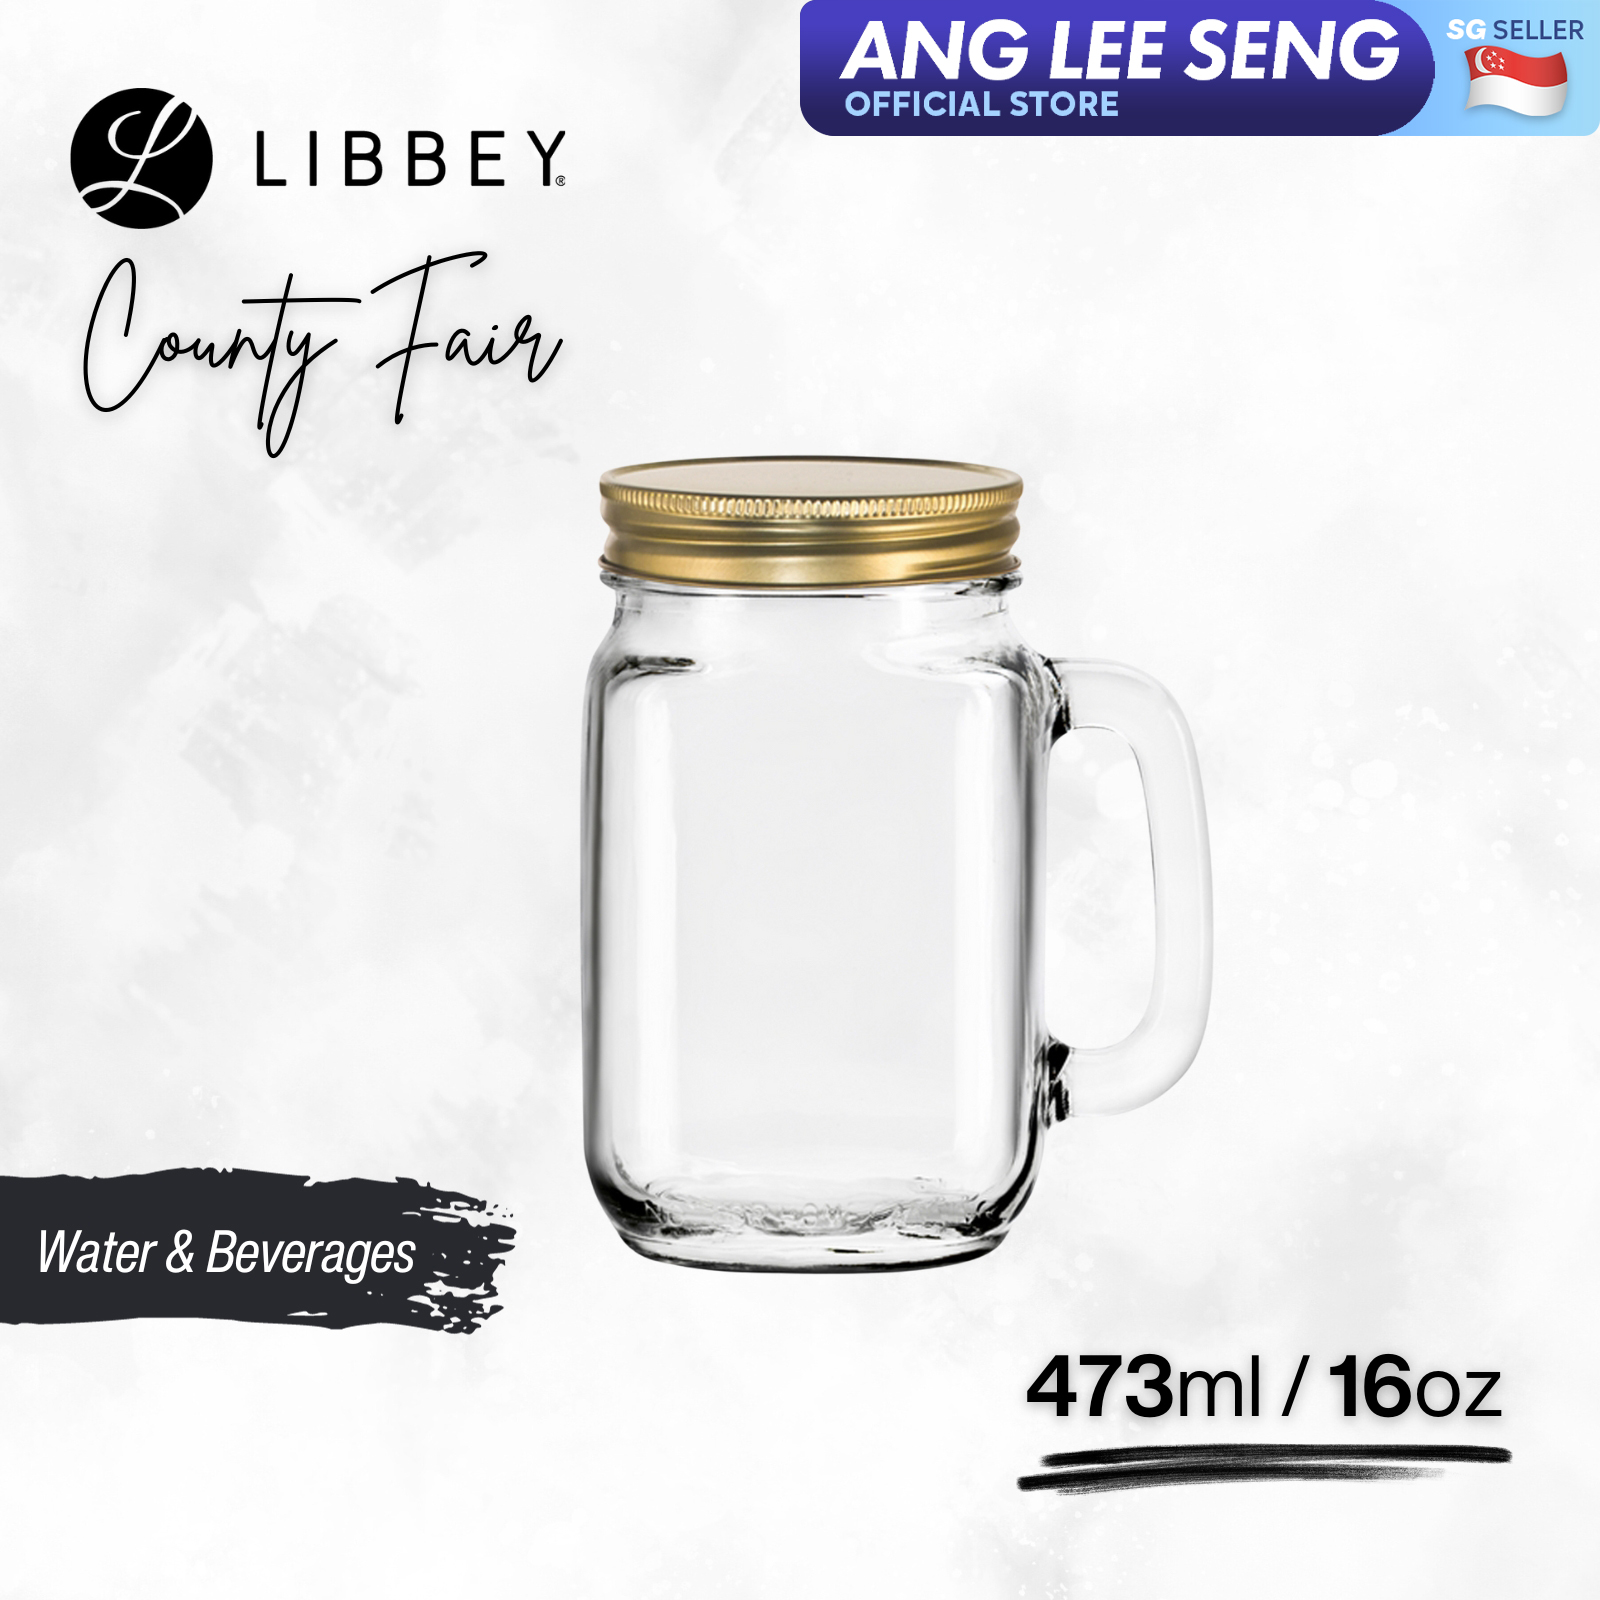 Libbey County Fair 97084 Glass Drinking Mason Jar with Gold Lid 473ml/16oz, 2-pc/6-pc Set